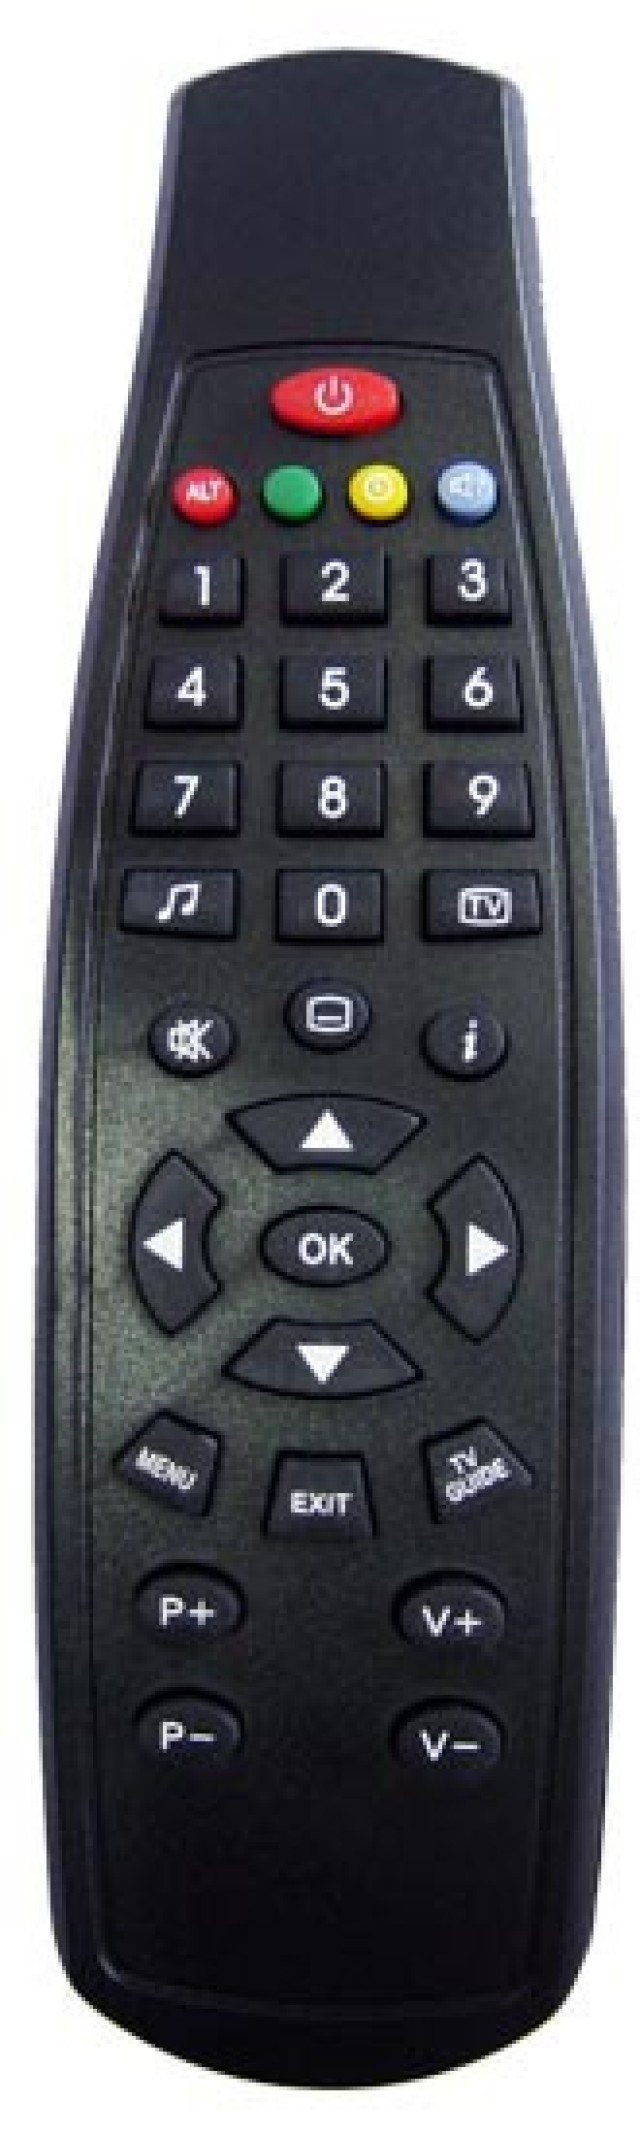 OEM, 0078, Remote control compatible with PANASAT-NOVA